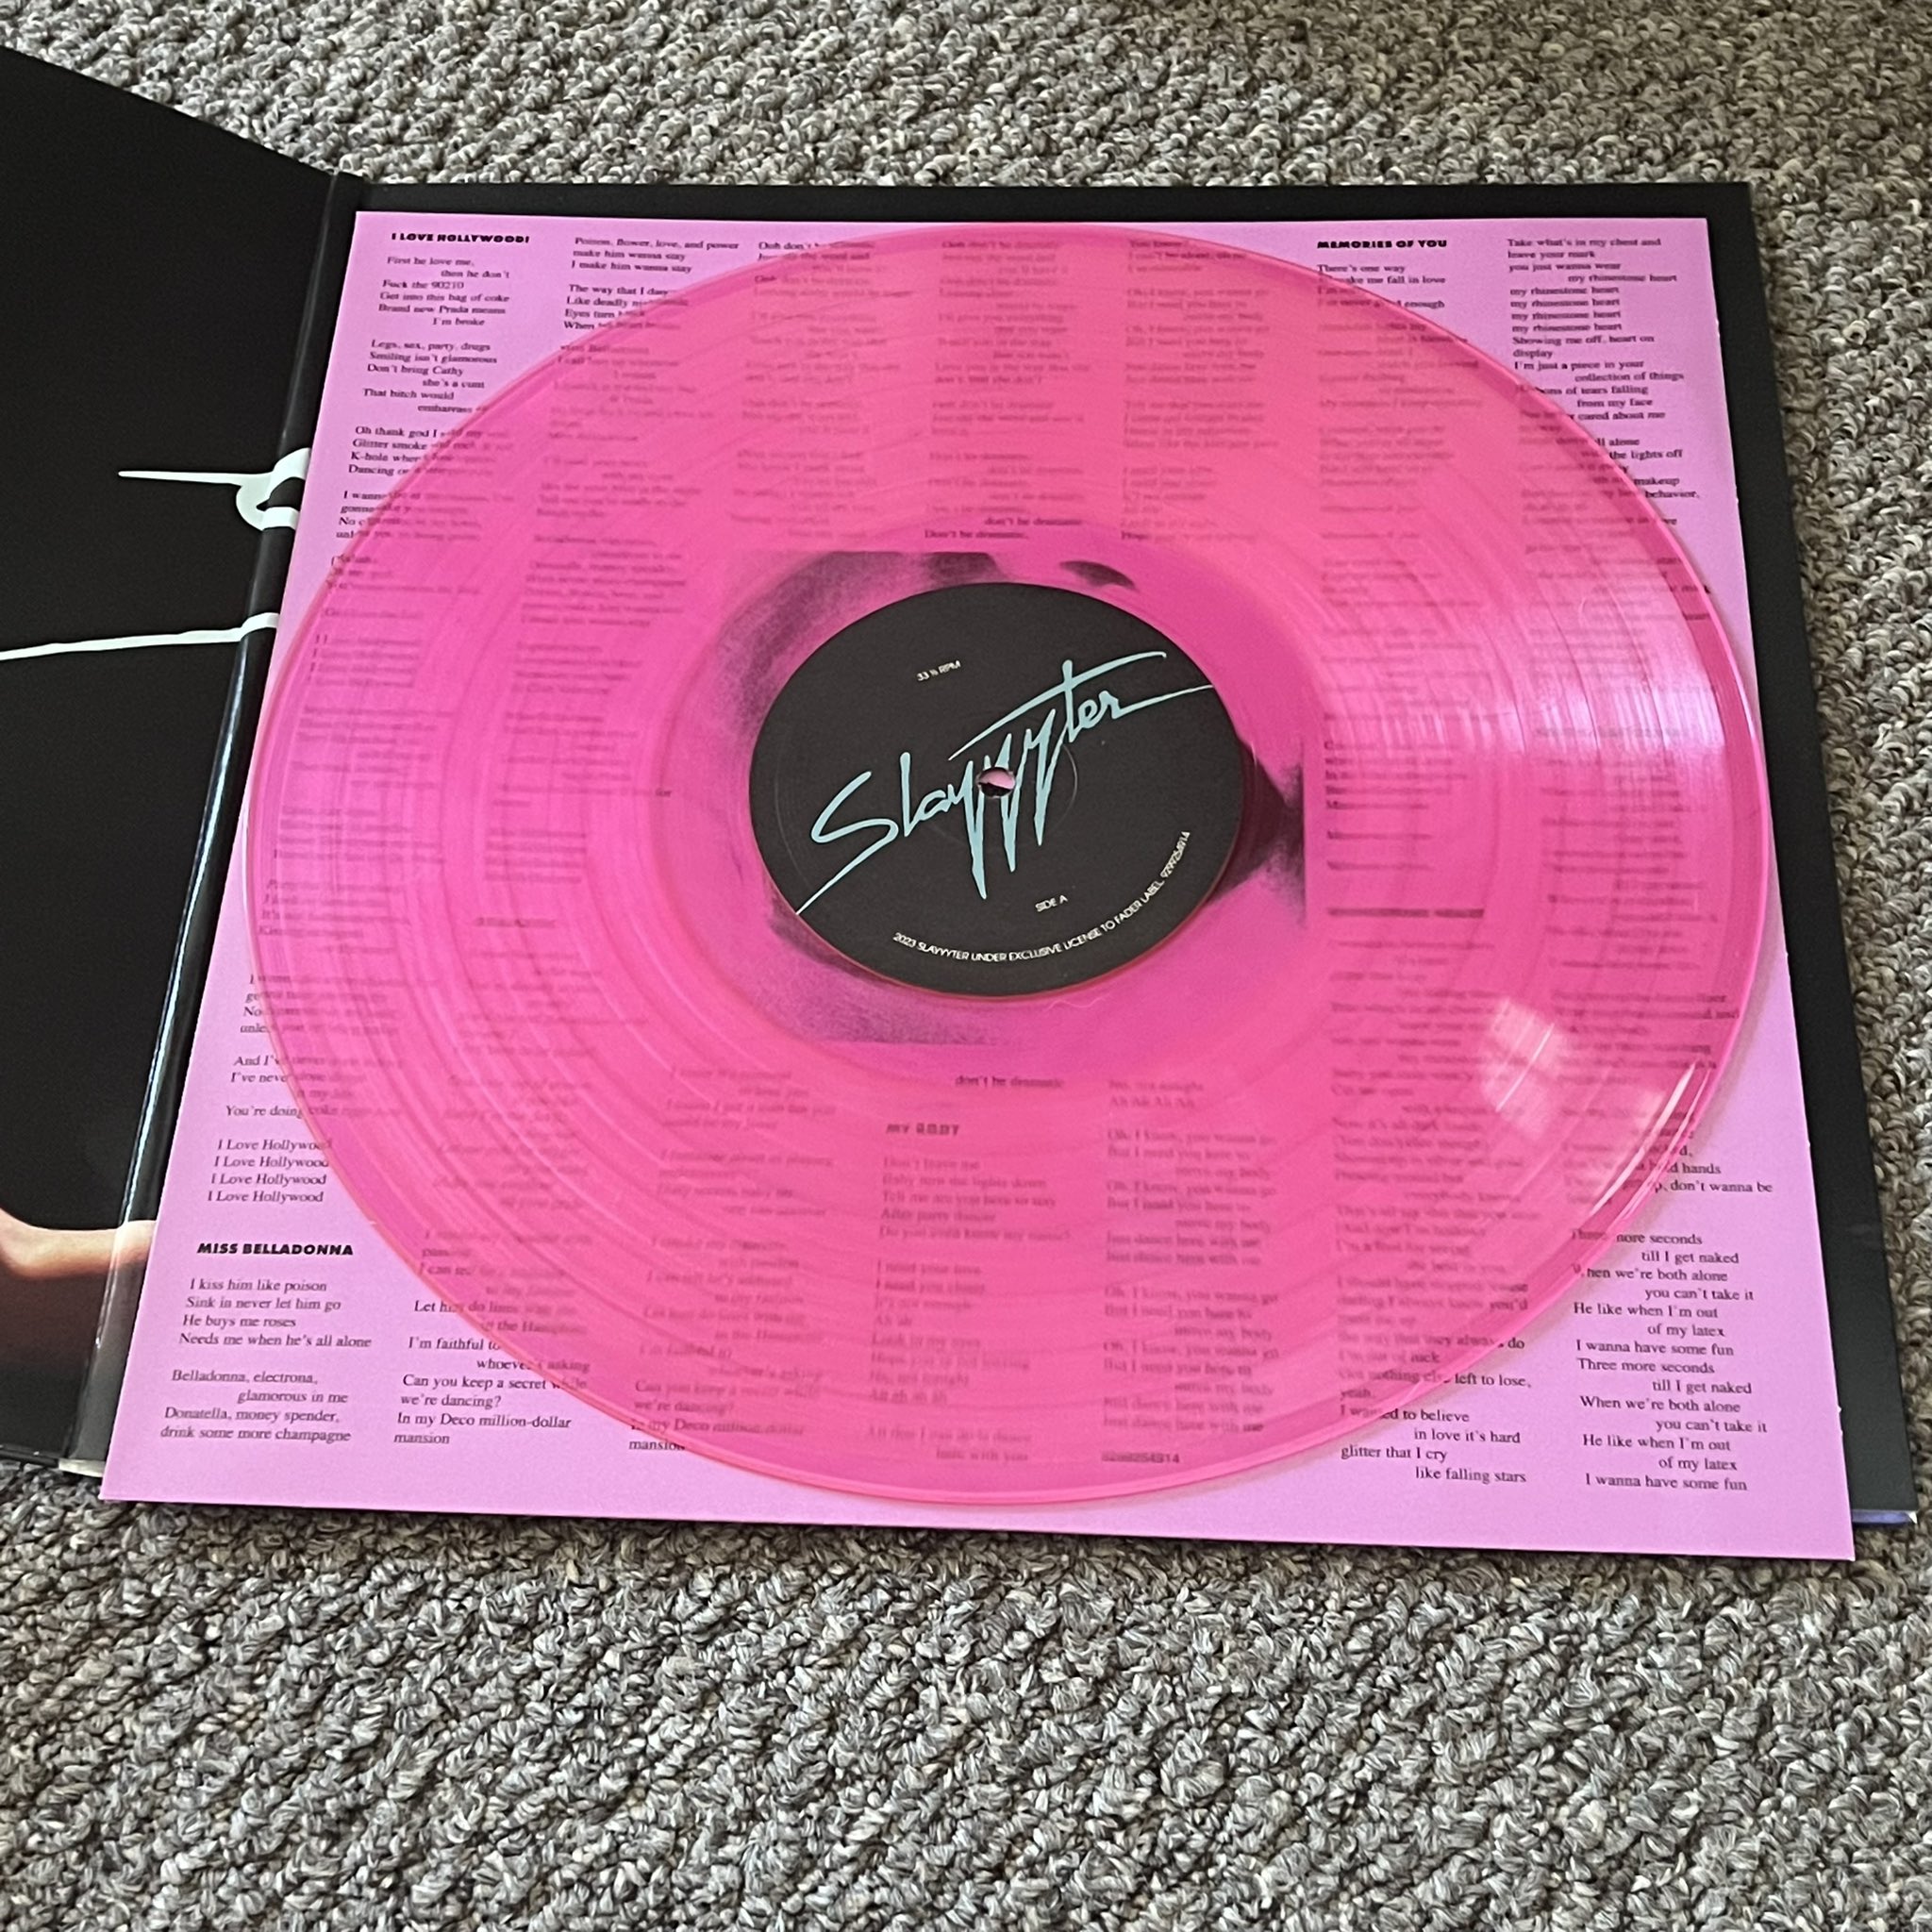 Slayyyter - STARFUCKER: Limited Pink Vinyl LP - Sound of Vinyl